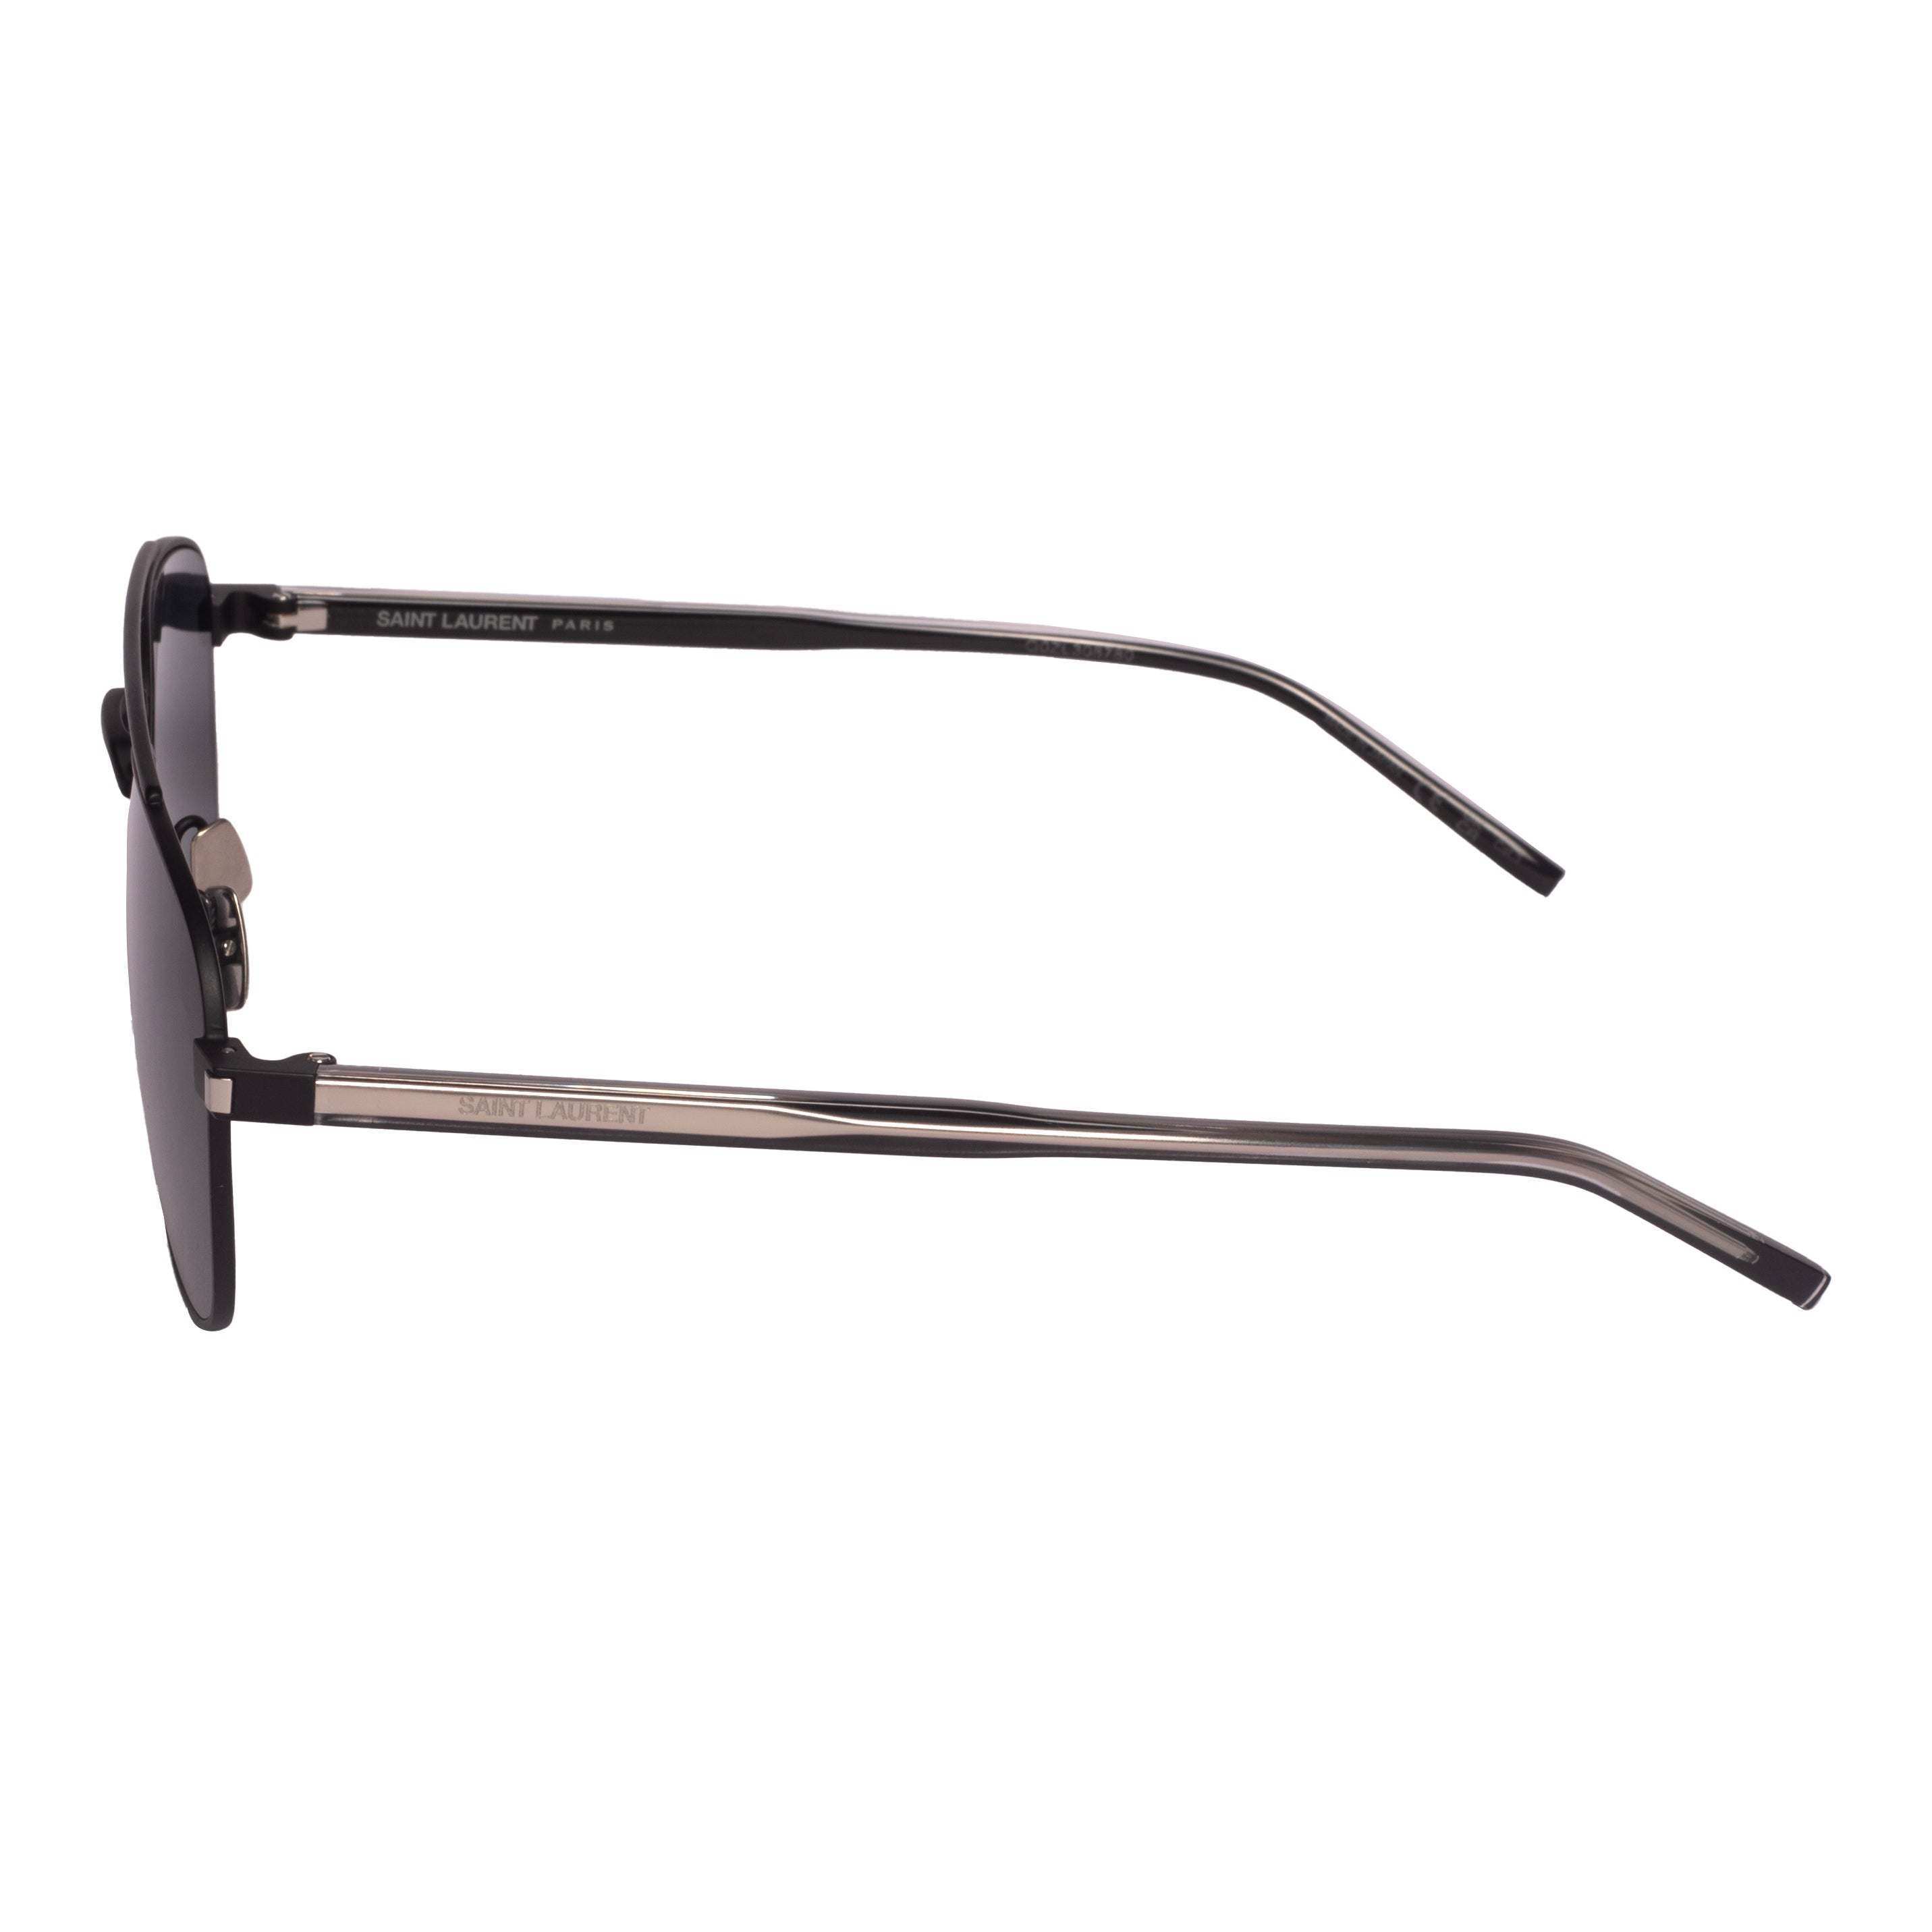 Saint Laurent-SL 665-56-001 Sunglasses - Premium Sunglasses from Saint Laurent - Just Rs. 28720! Shop now at Laxmi Opticians